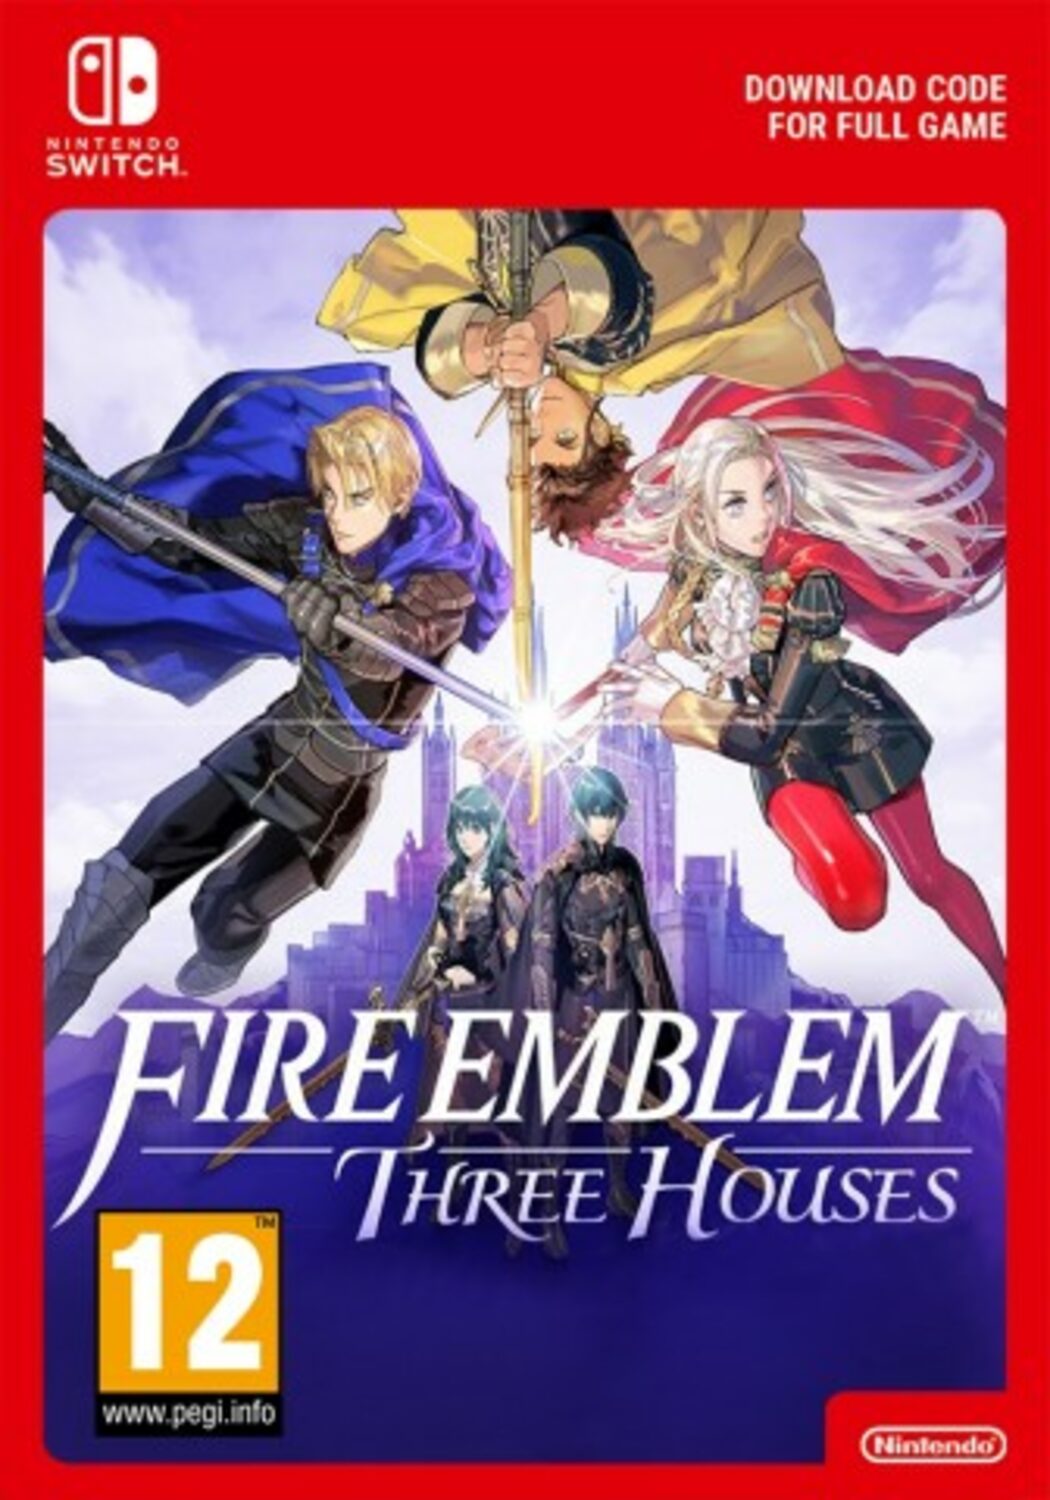 | Houses ENEBA Three Buy Emblem: Fire Nintendo key! Switch